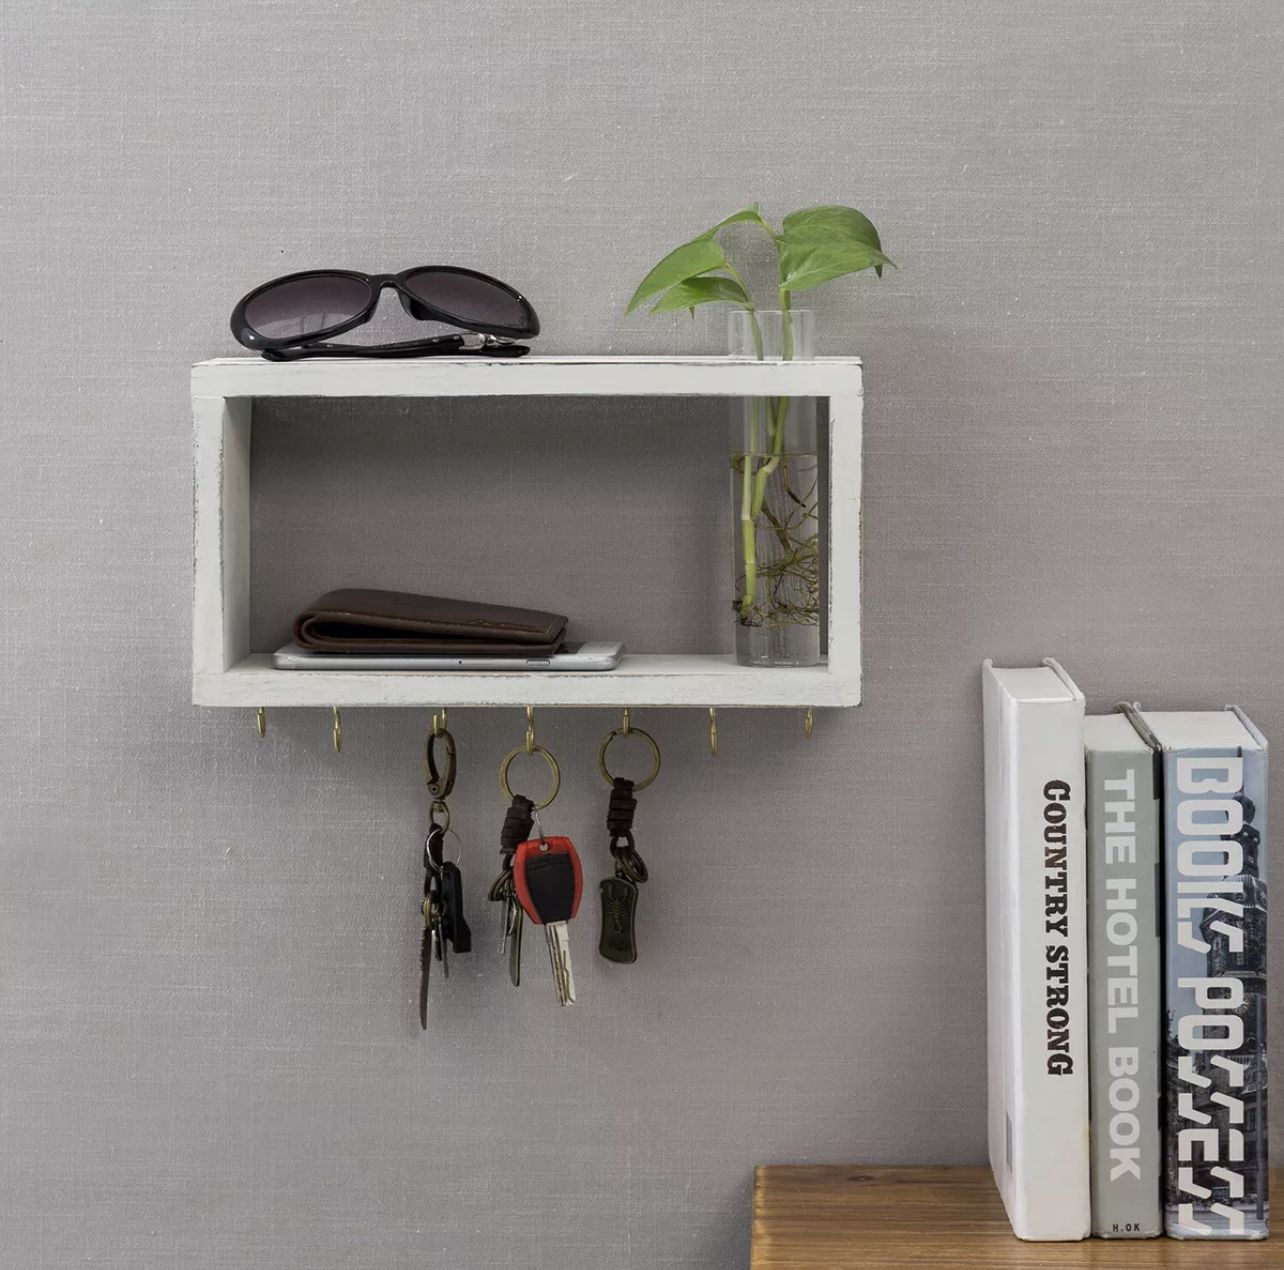 wall mounted shelf organizer W/ 7 brass key hook and a glass vase